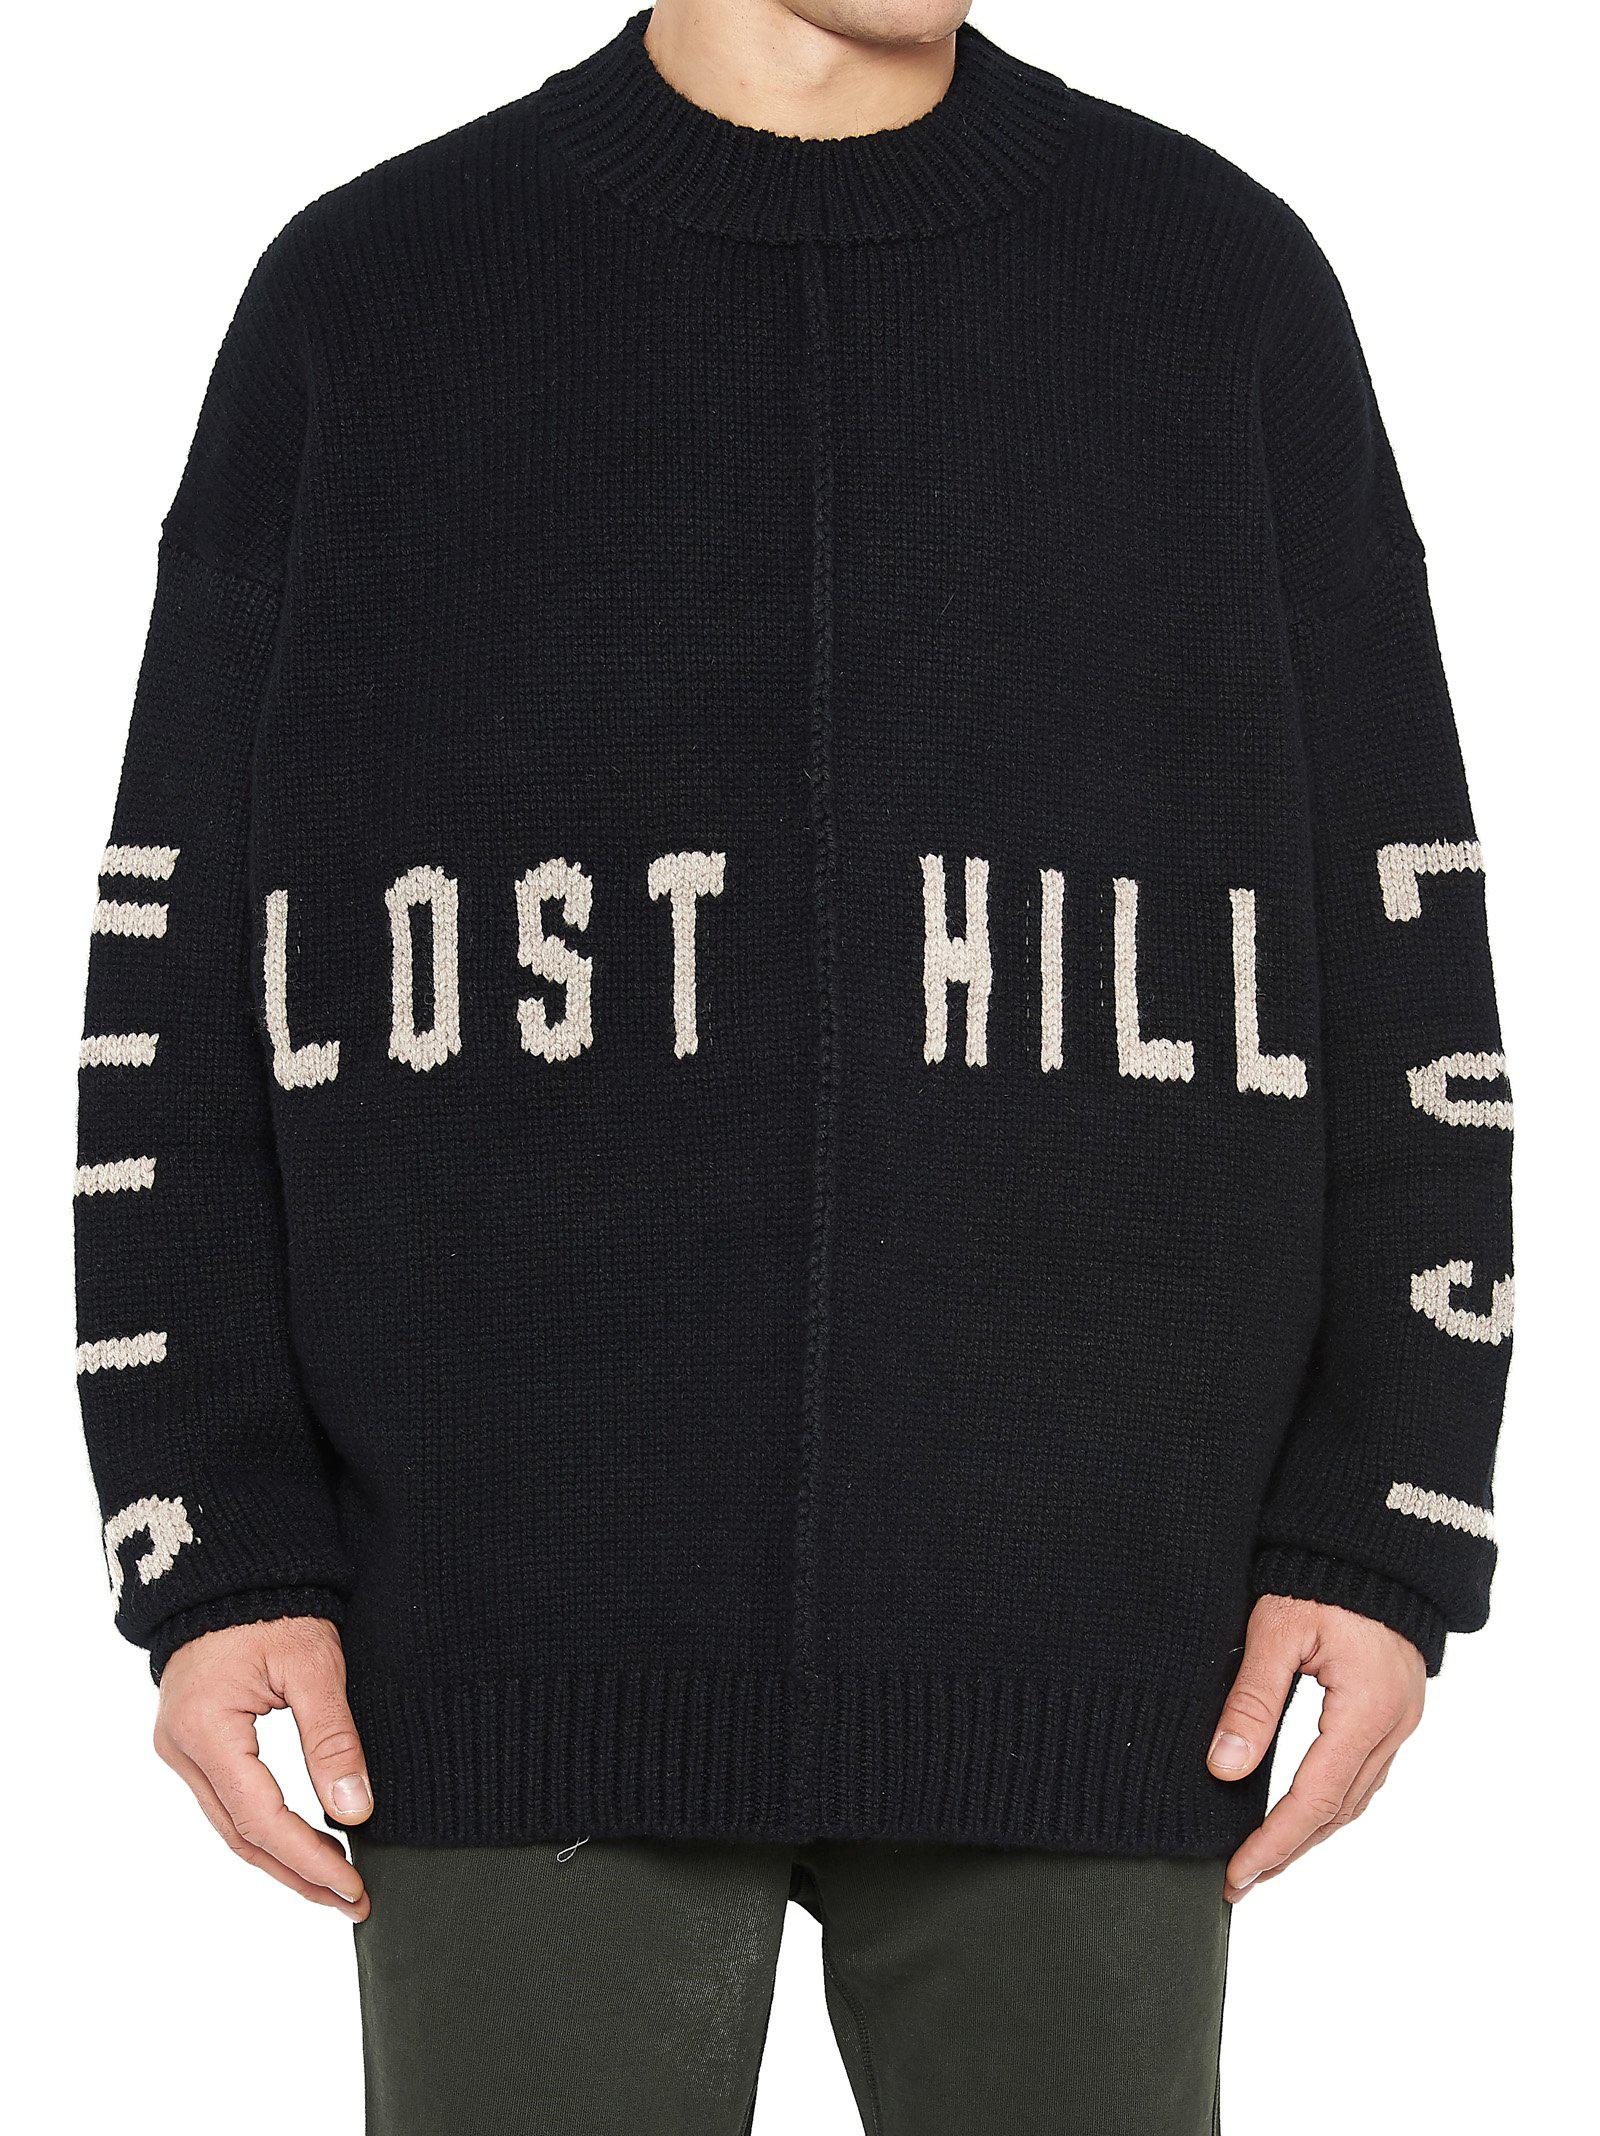 yeezy lost hills sweater